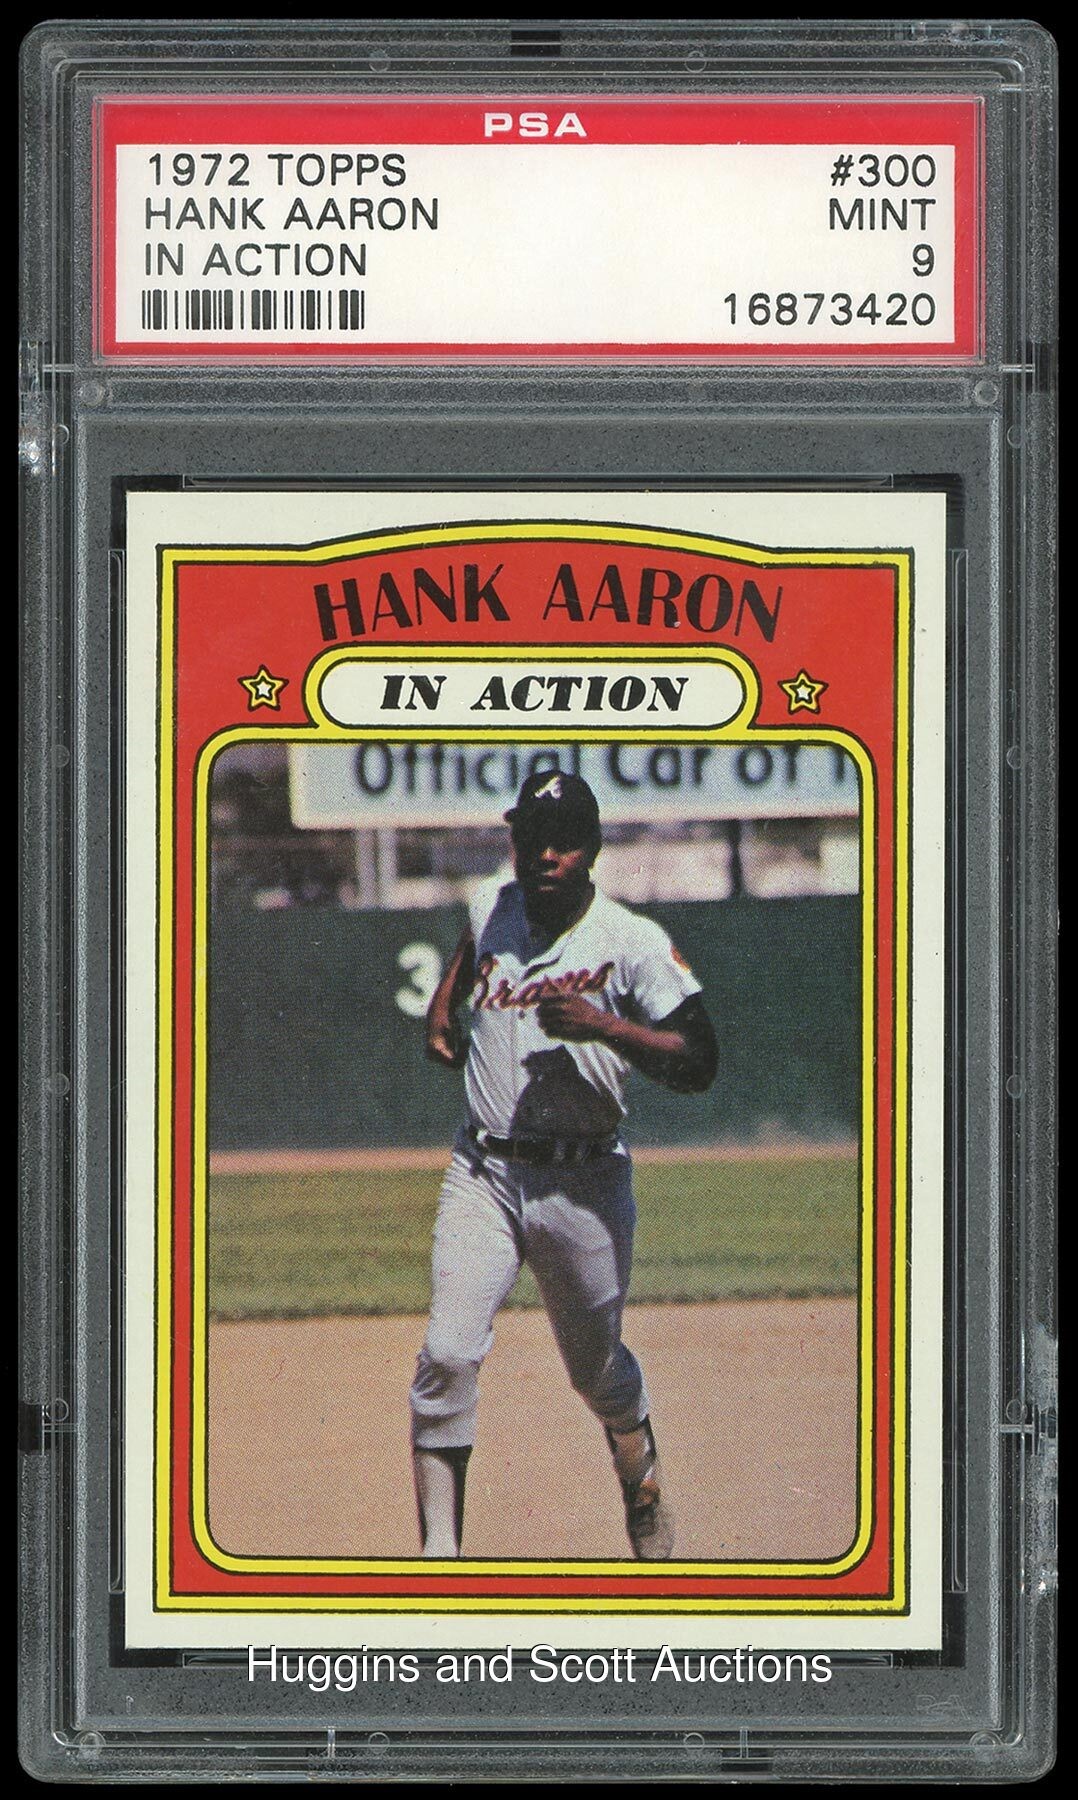 1972 Topps Baseball #300 Hank Aaron In Action PSA Mint 9 - None Better!